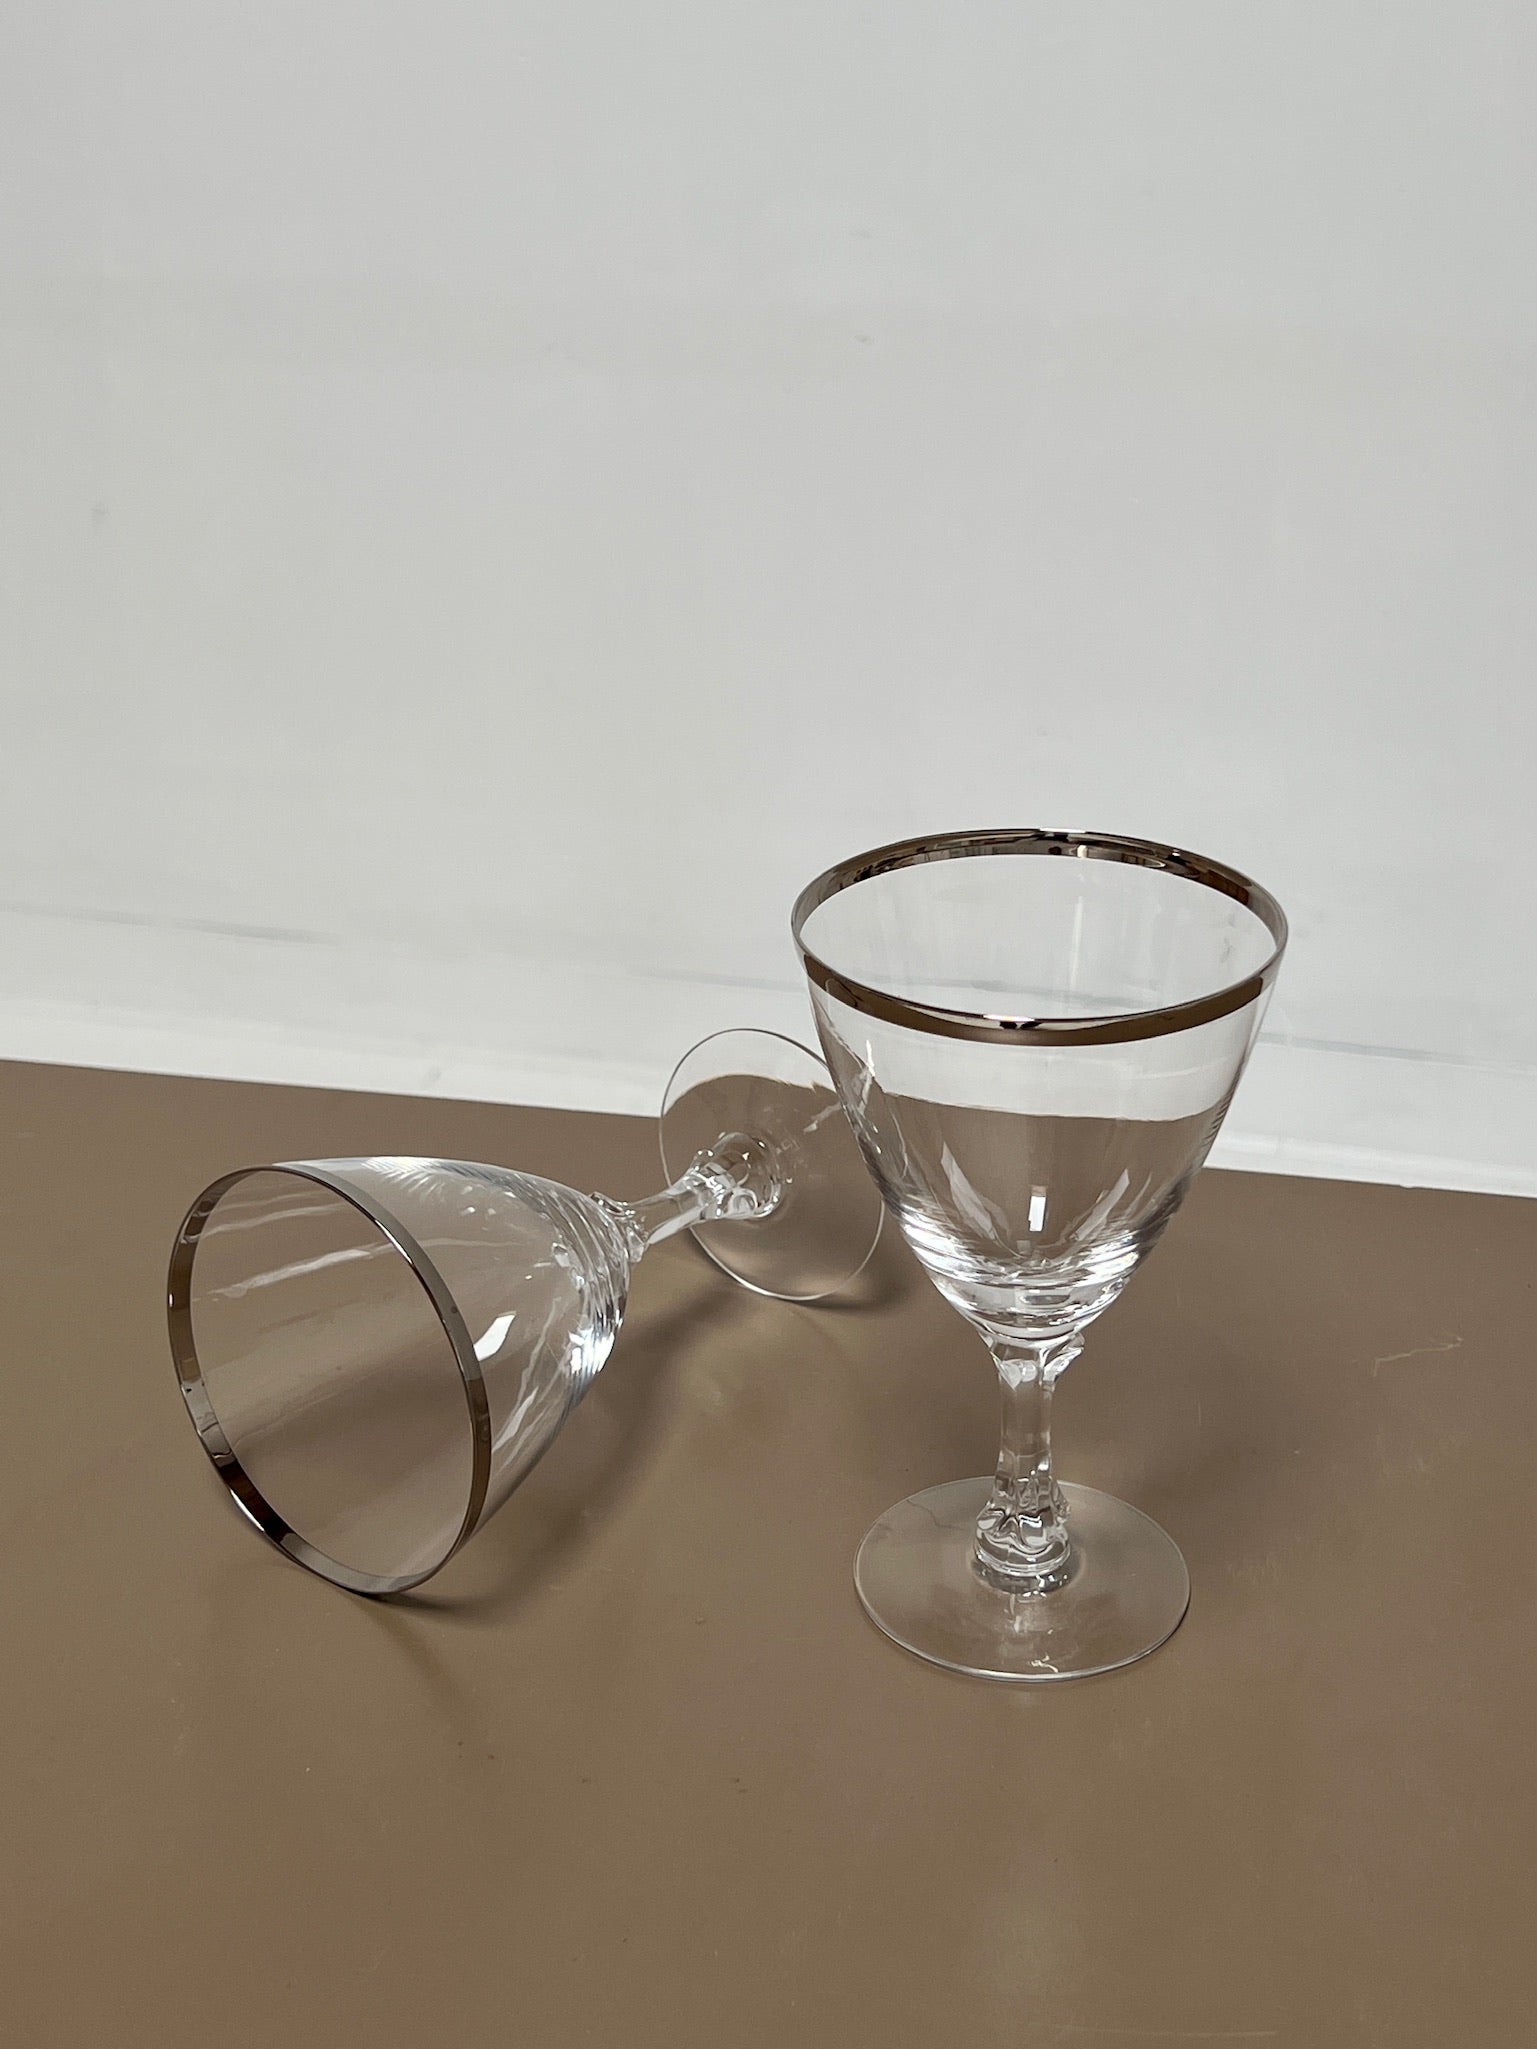 Fostoria Crystal Wine Glasses